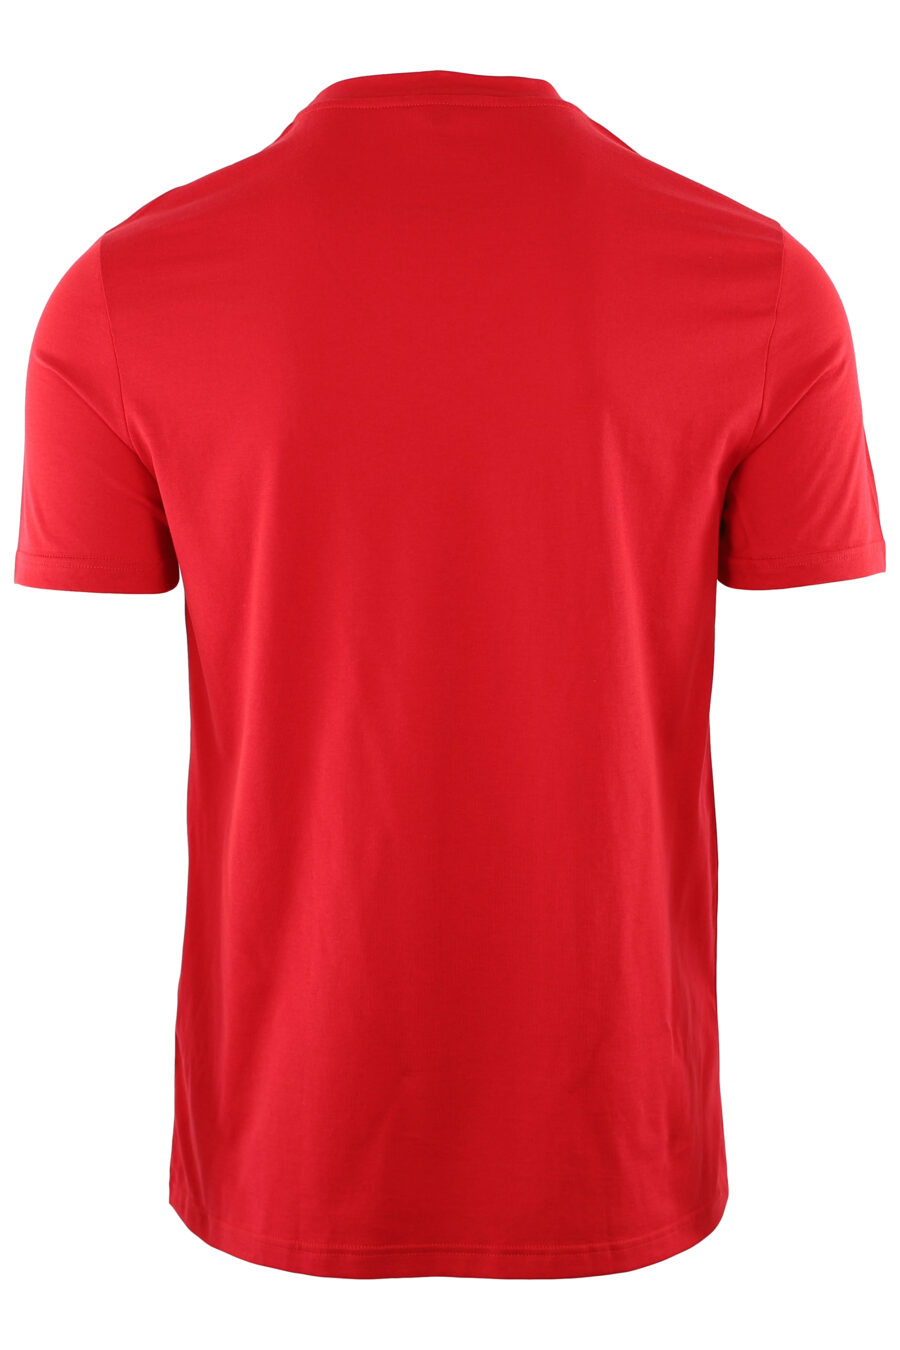 Camiseta roja con logo blanco bordado - IMG 7410